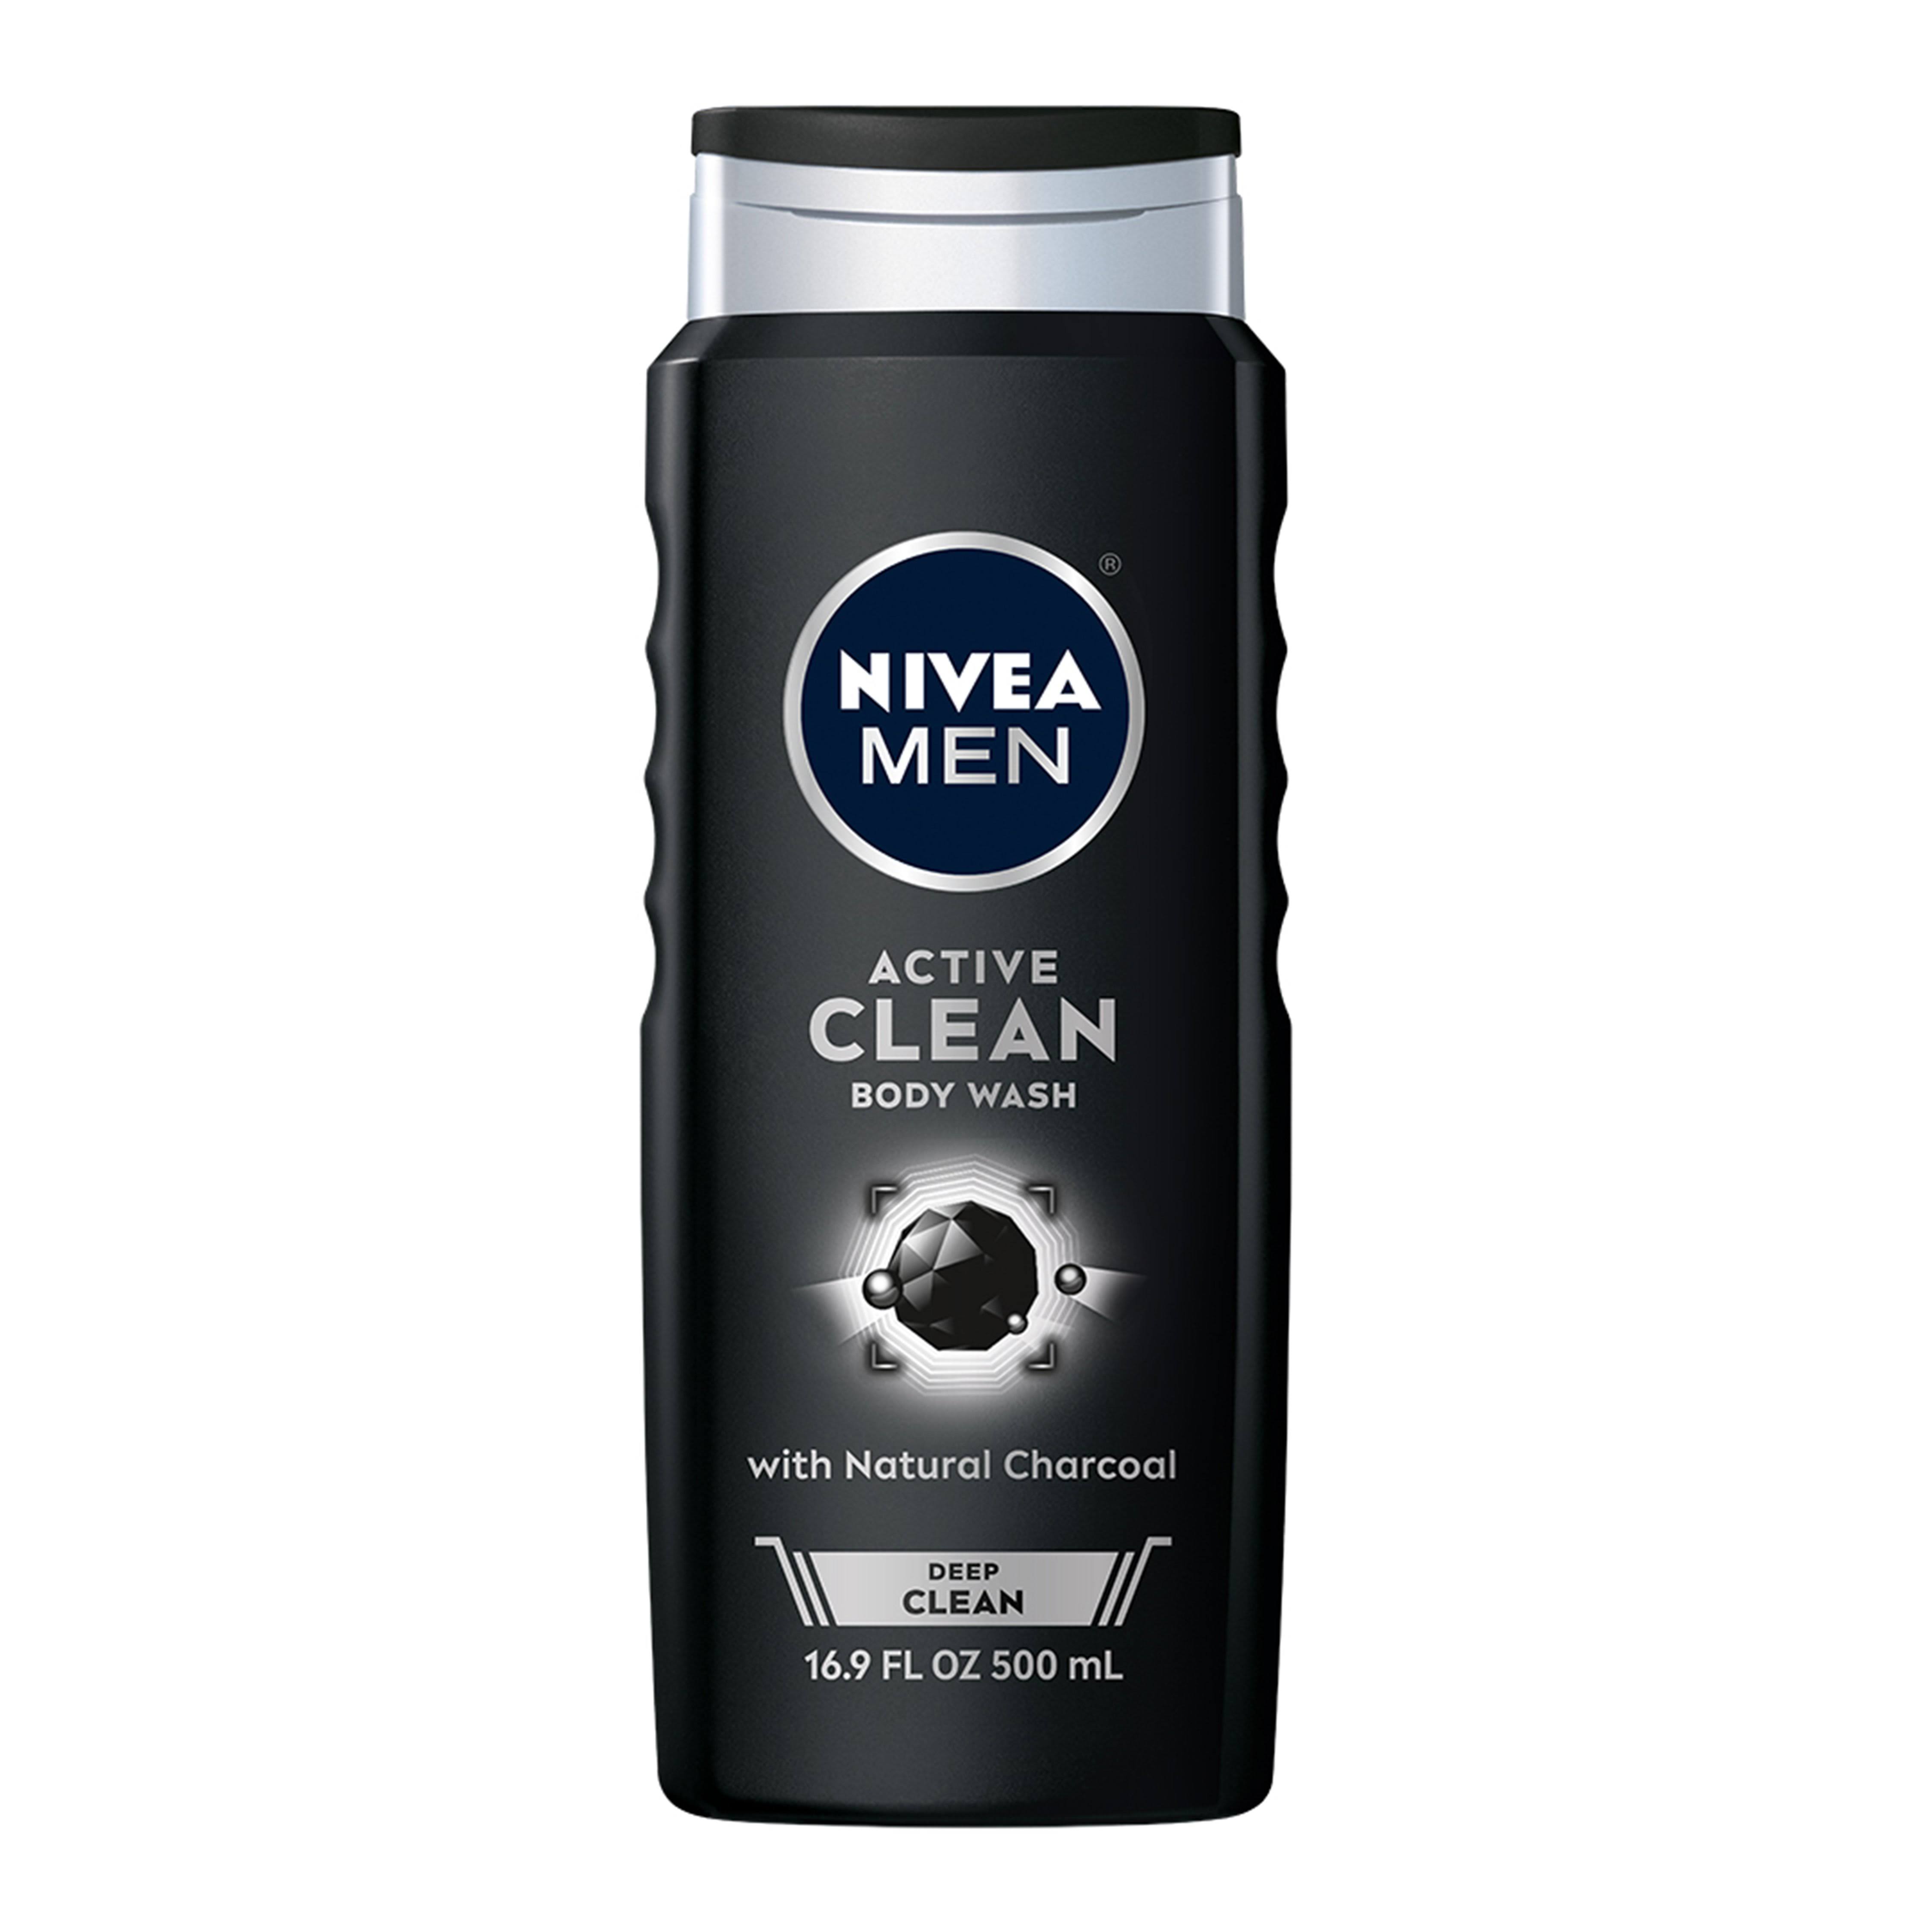 Nivea Men Active Clean Charcoal Body Wash - 500ml